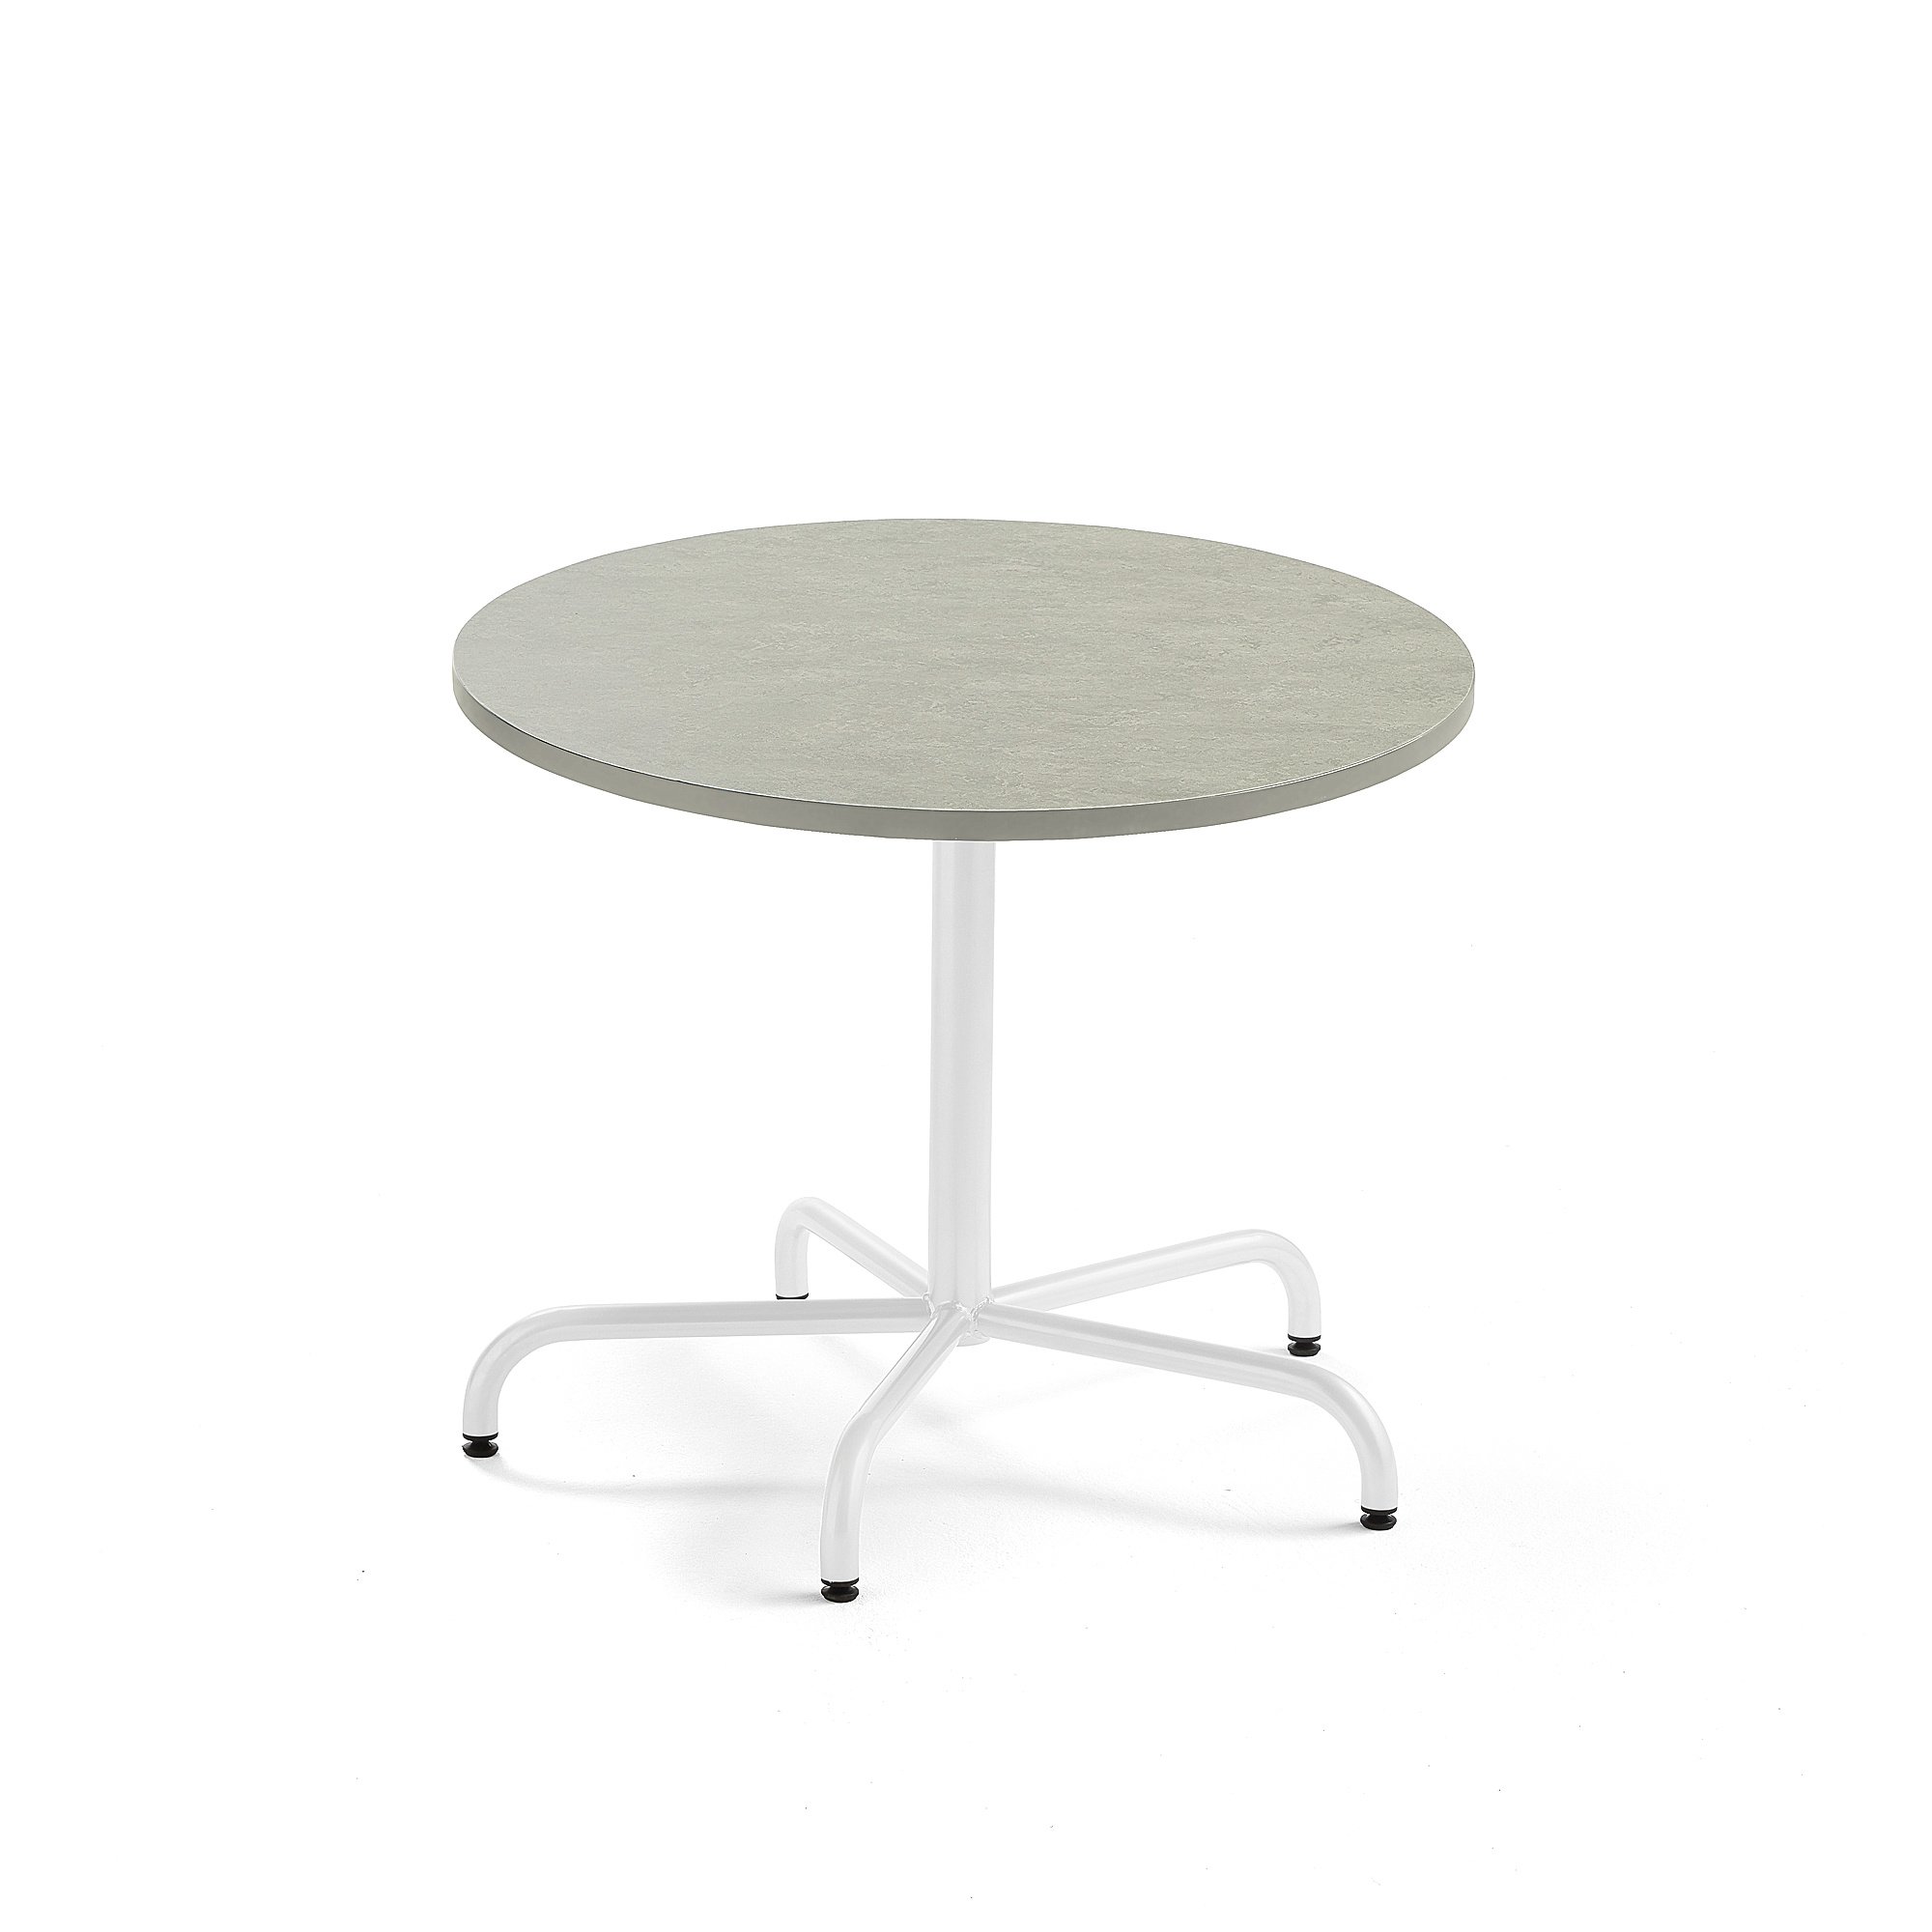 Stůl PLURAL, Ø900x720 mm, linoleum, šedá, bílá